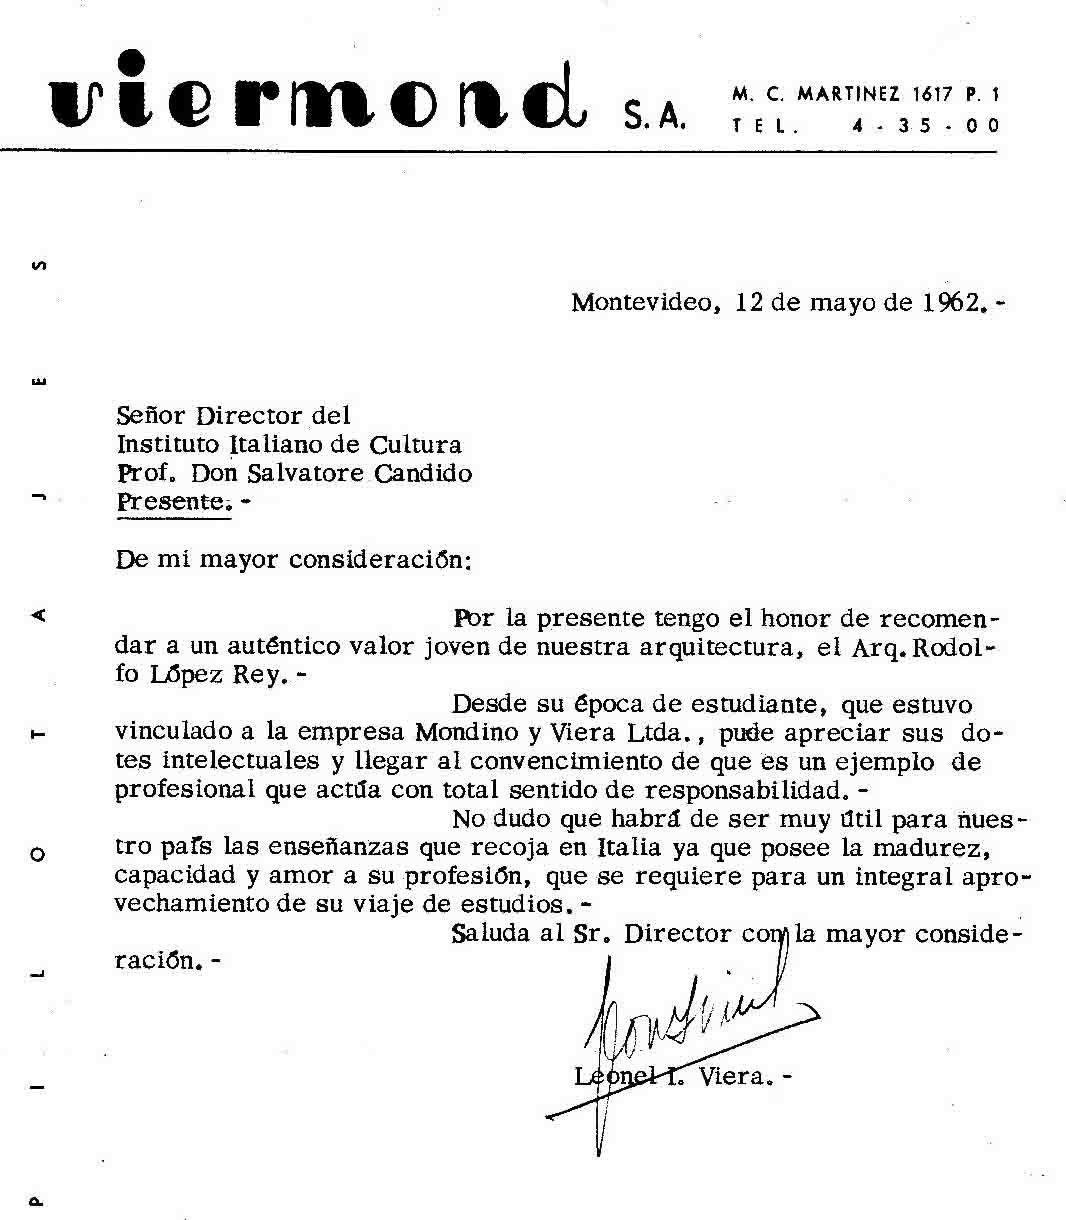 Letter from Leonel Viera